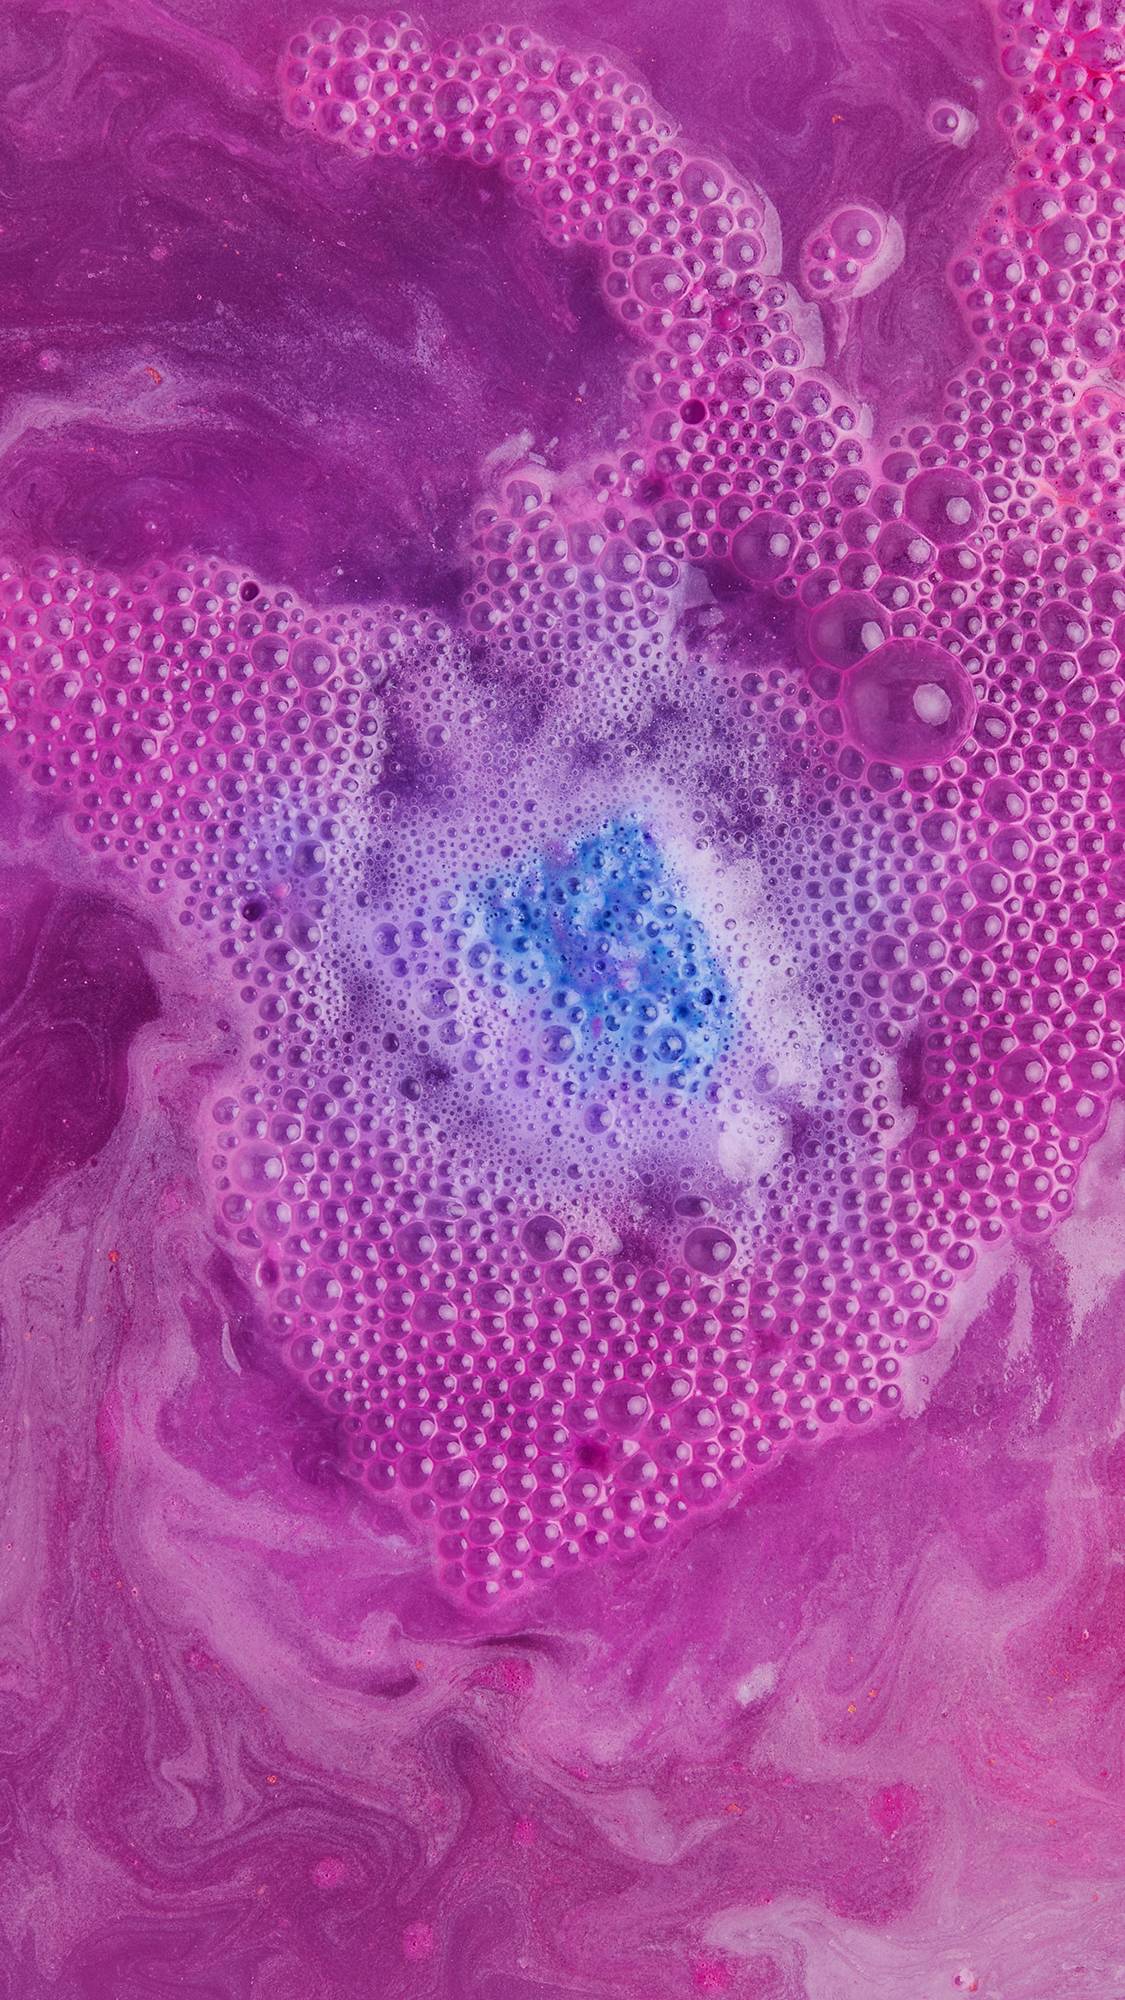 Dreidel, Dreidel, Dreidel bath bomb almost fully dissolved leaving a pastel purple among a sea of enchanting pink bubbles.